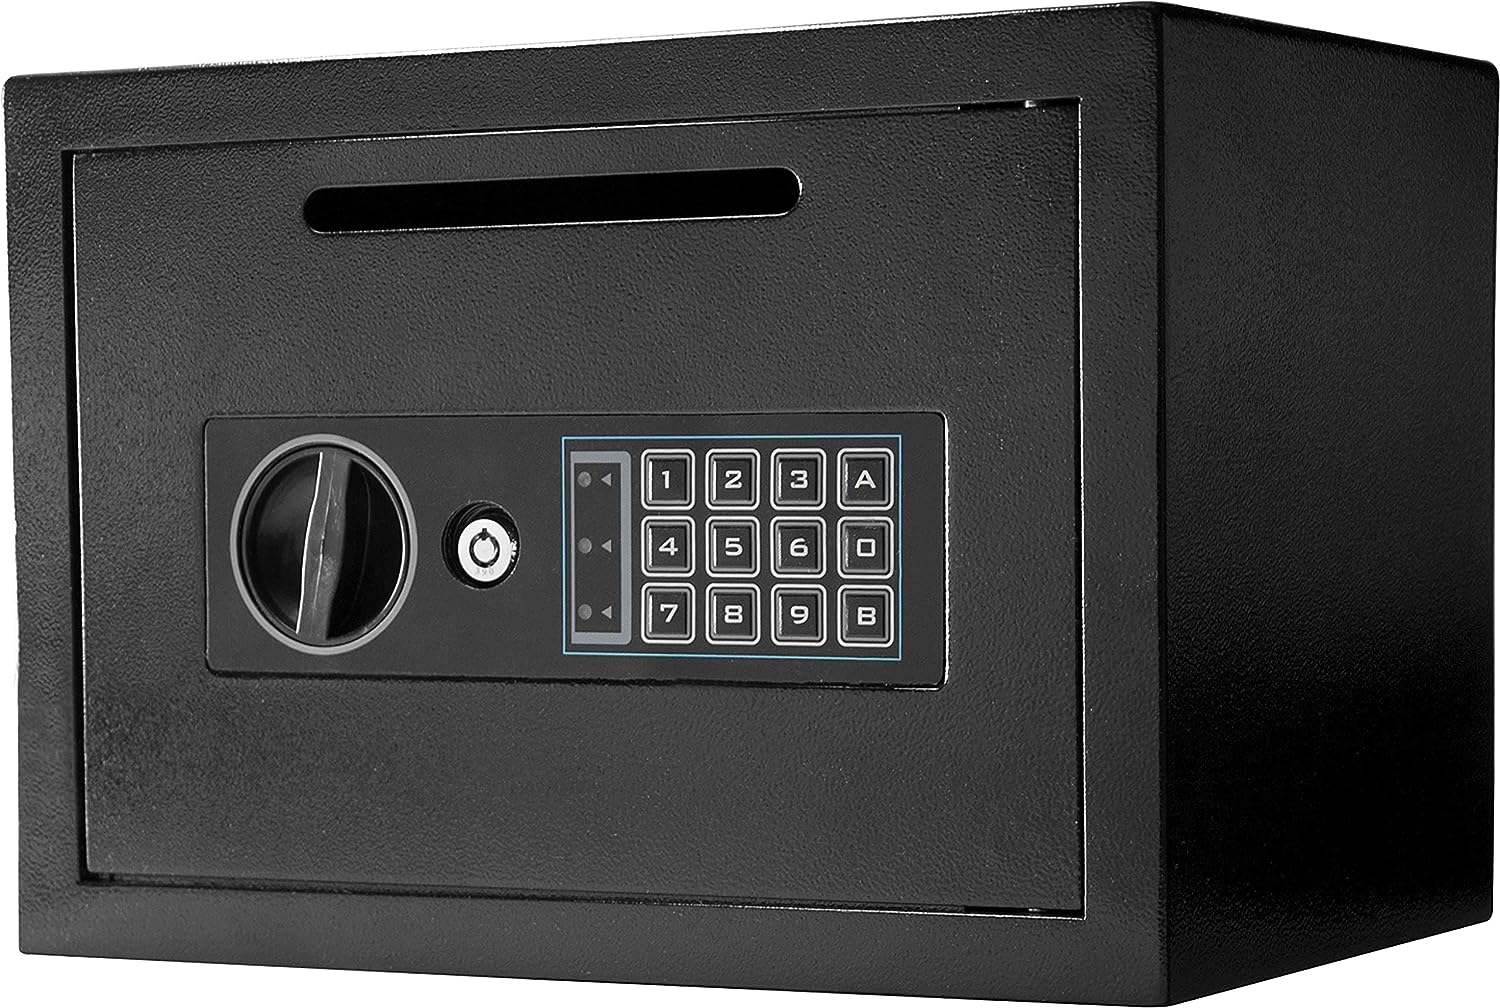 BARSKA AX11934 Safe Deposit Box | DeviceDaily.com